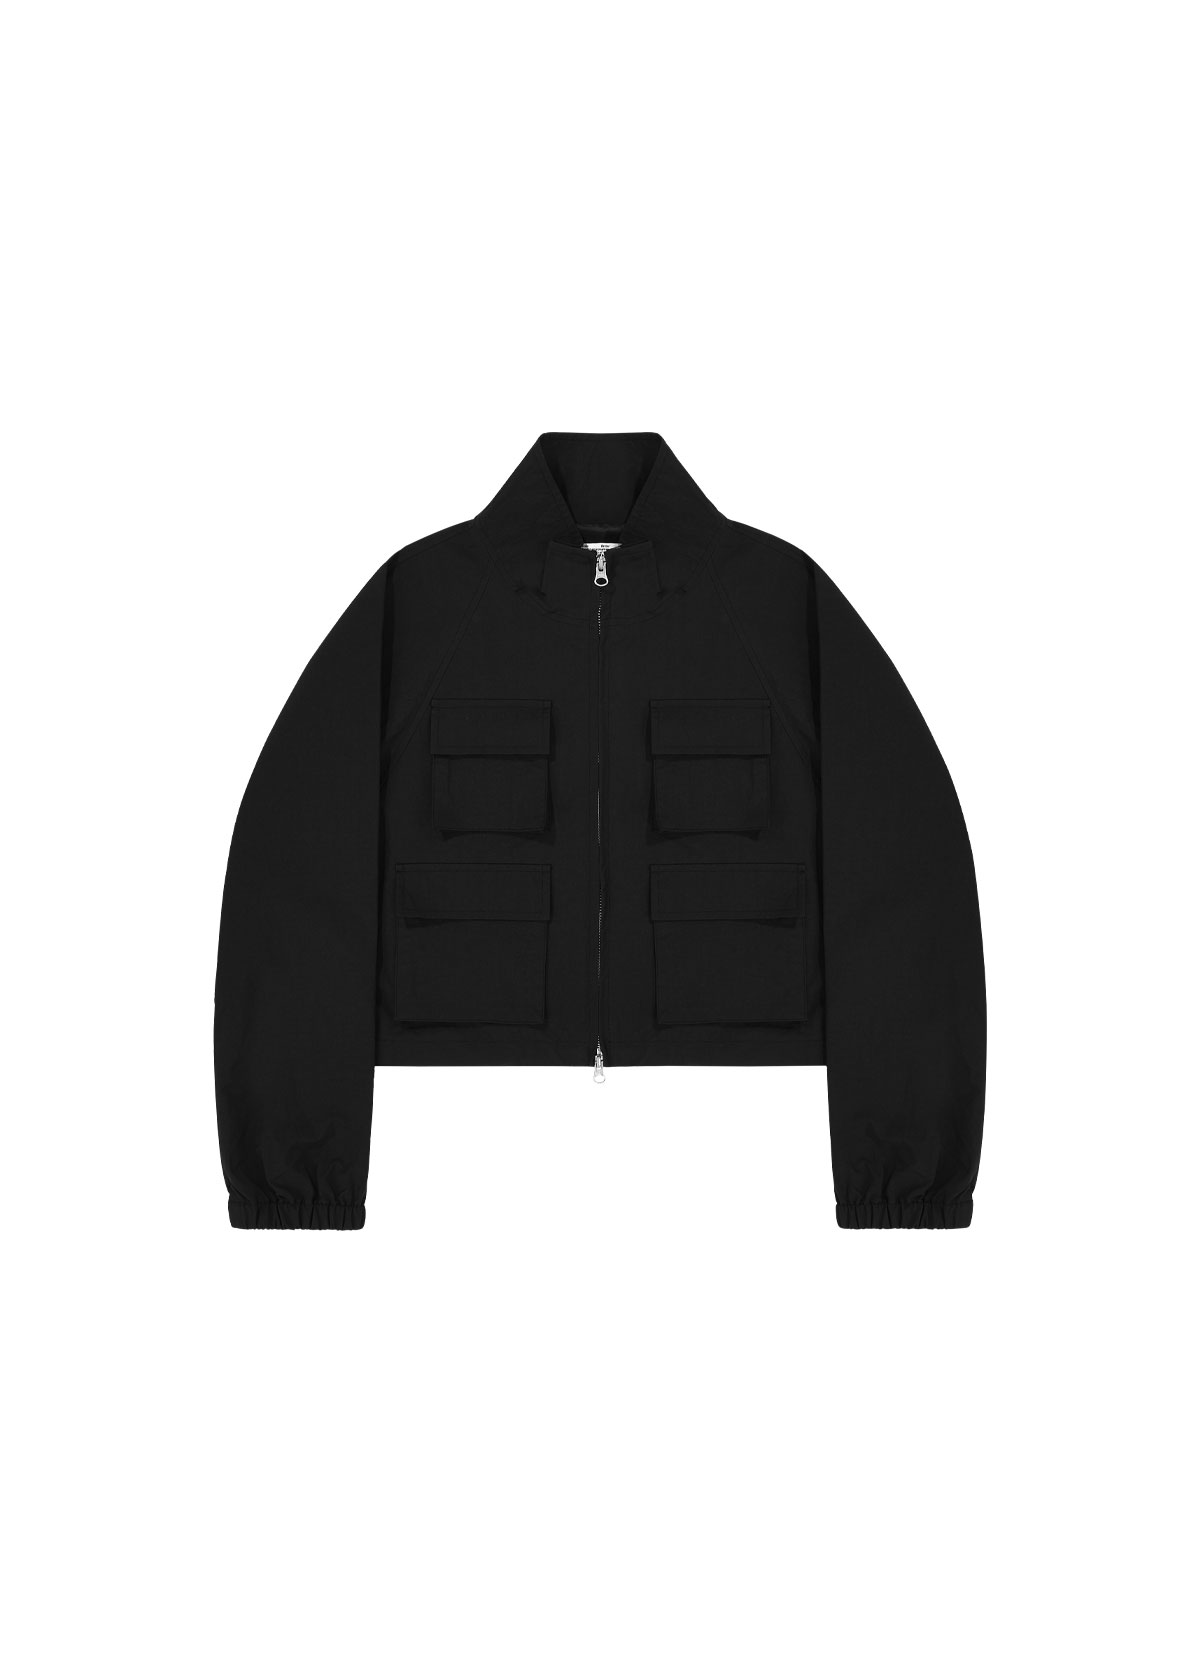 Pocket Jacket (black)